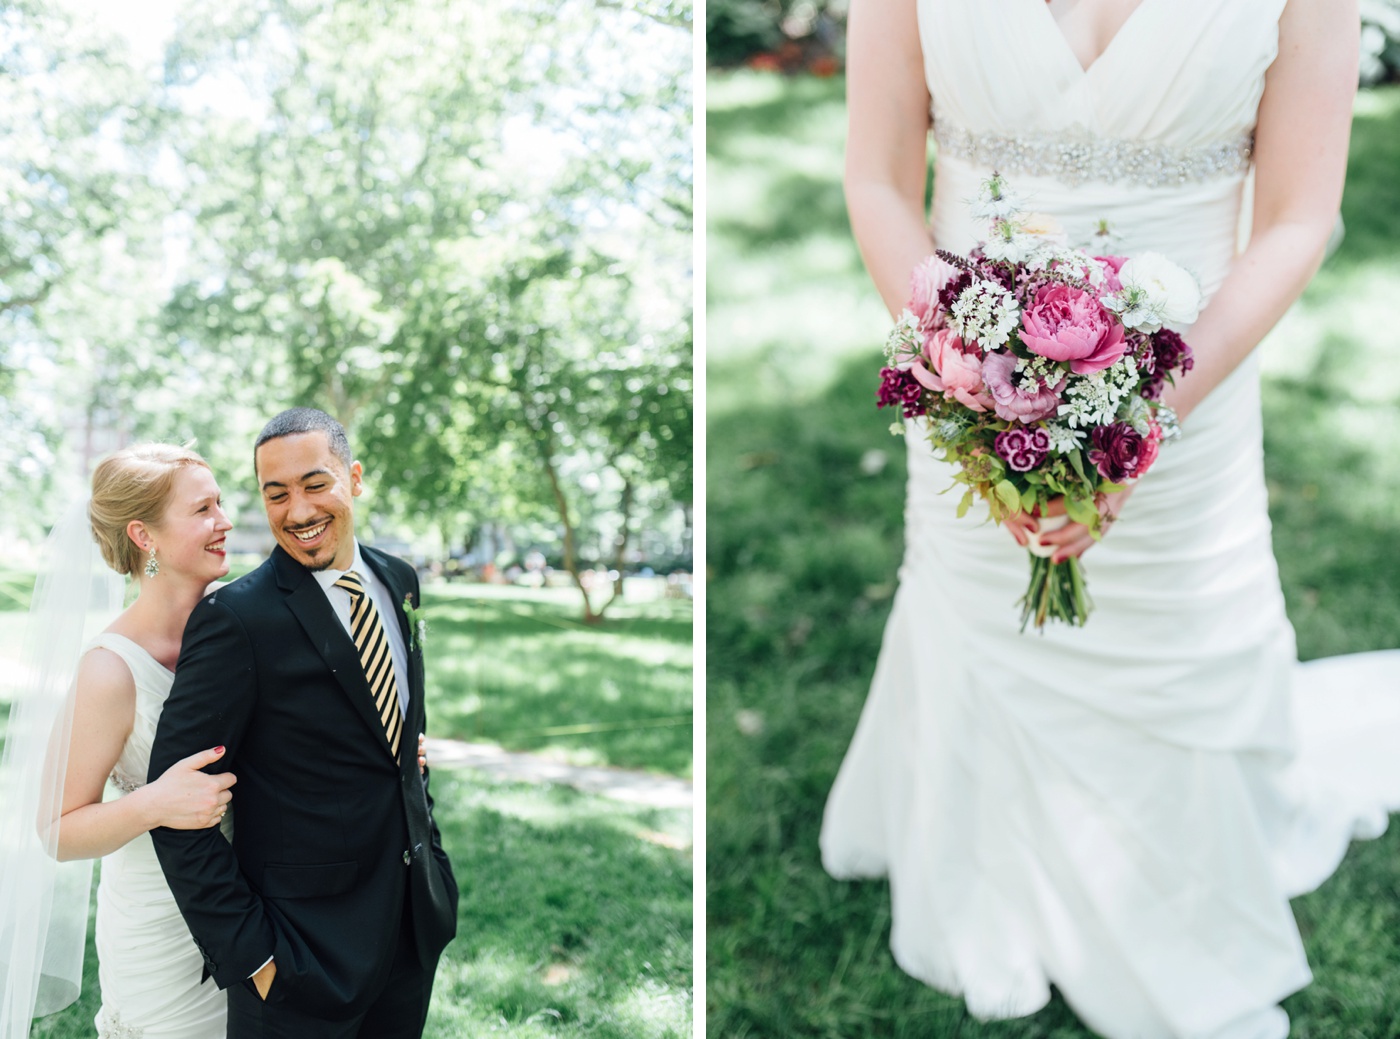 John + Madeleine - Rittenhouse Square Wedding - Philadelphia Wedding Photographer - Alison Dunn Photography photo